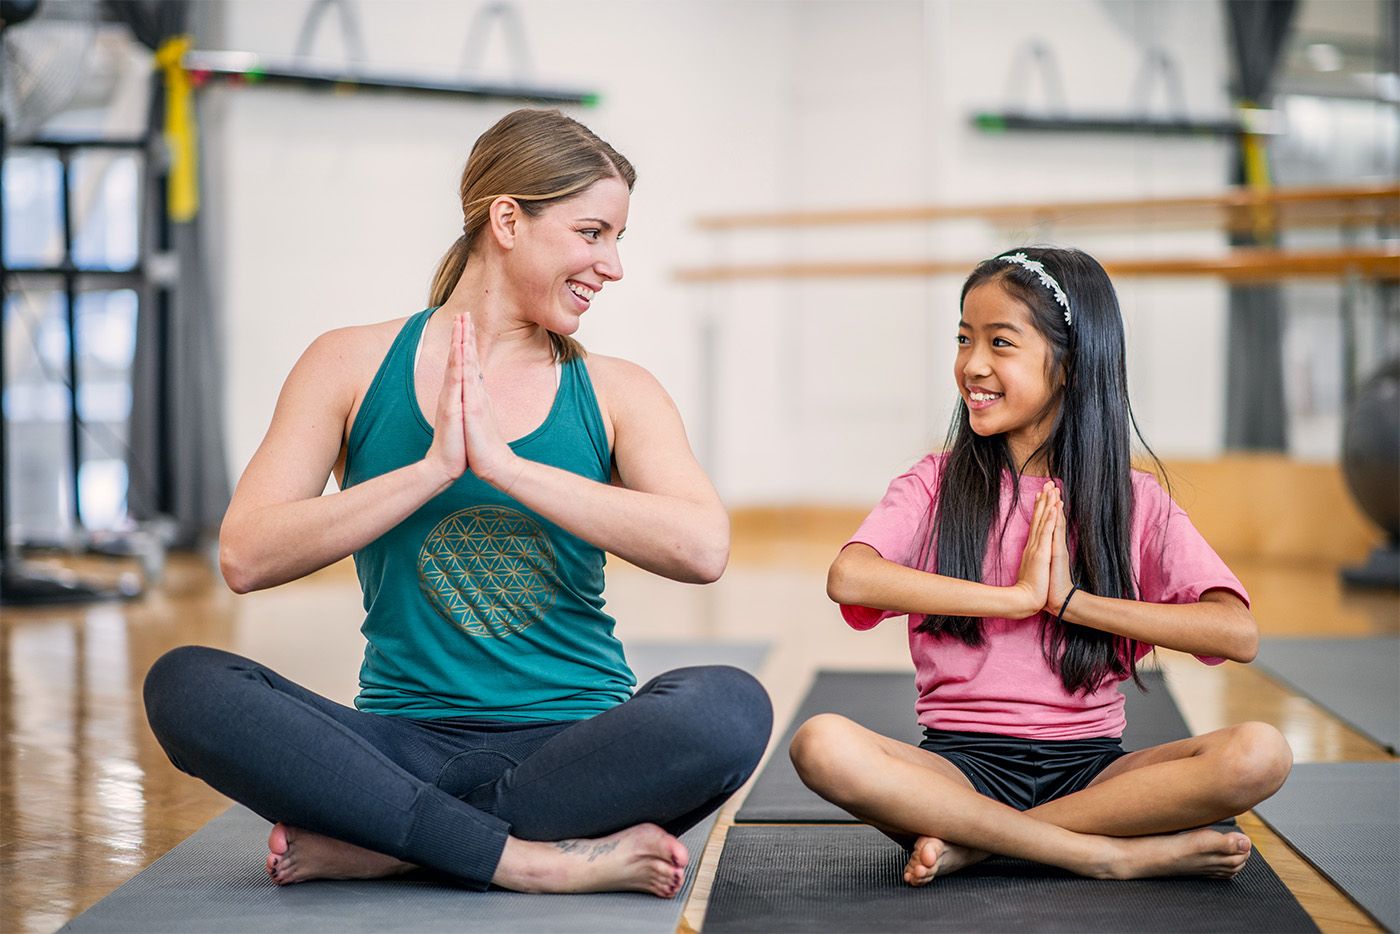 Children's yoga teacher with student